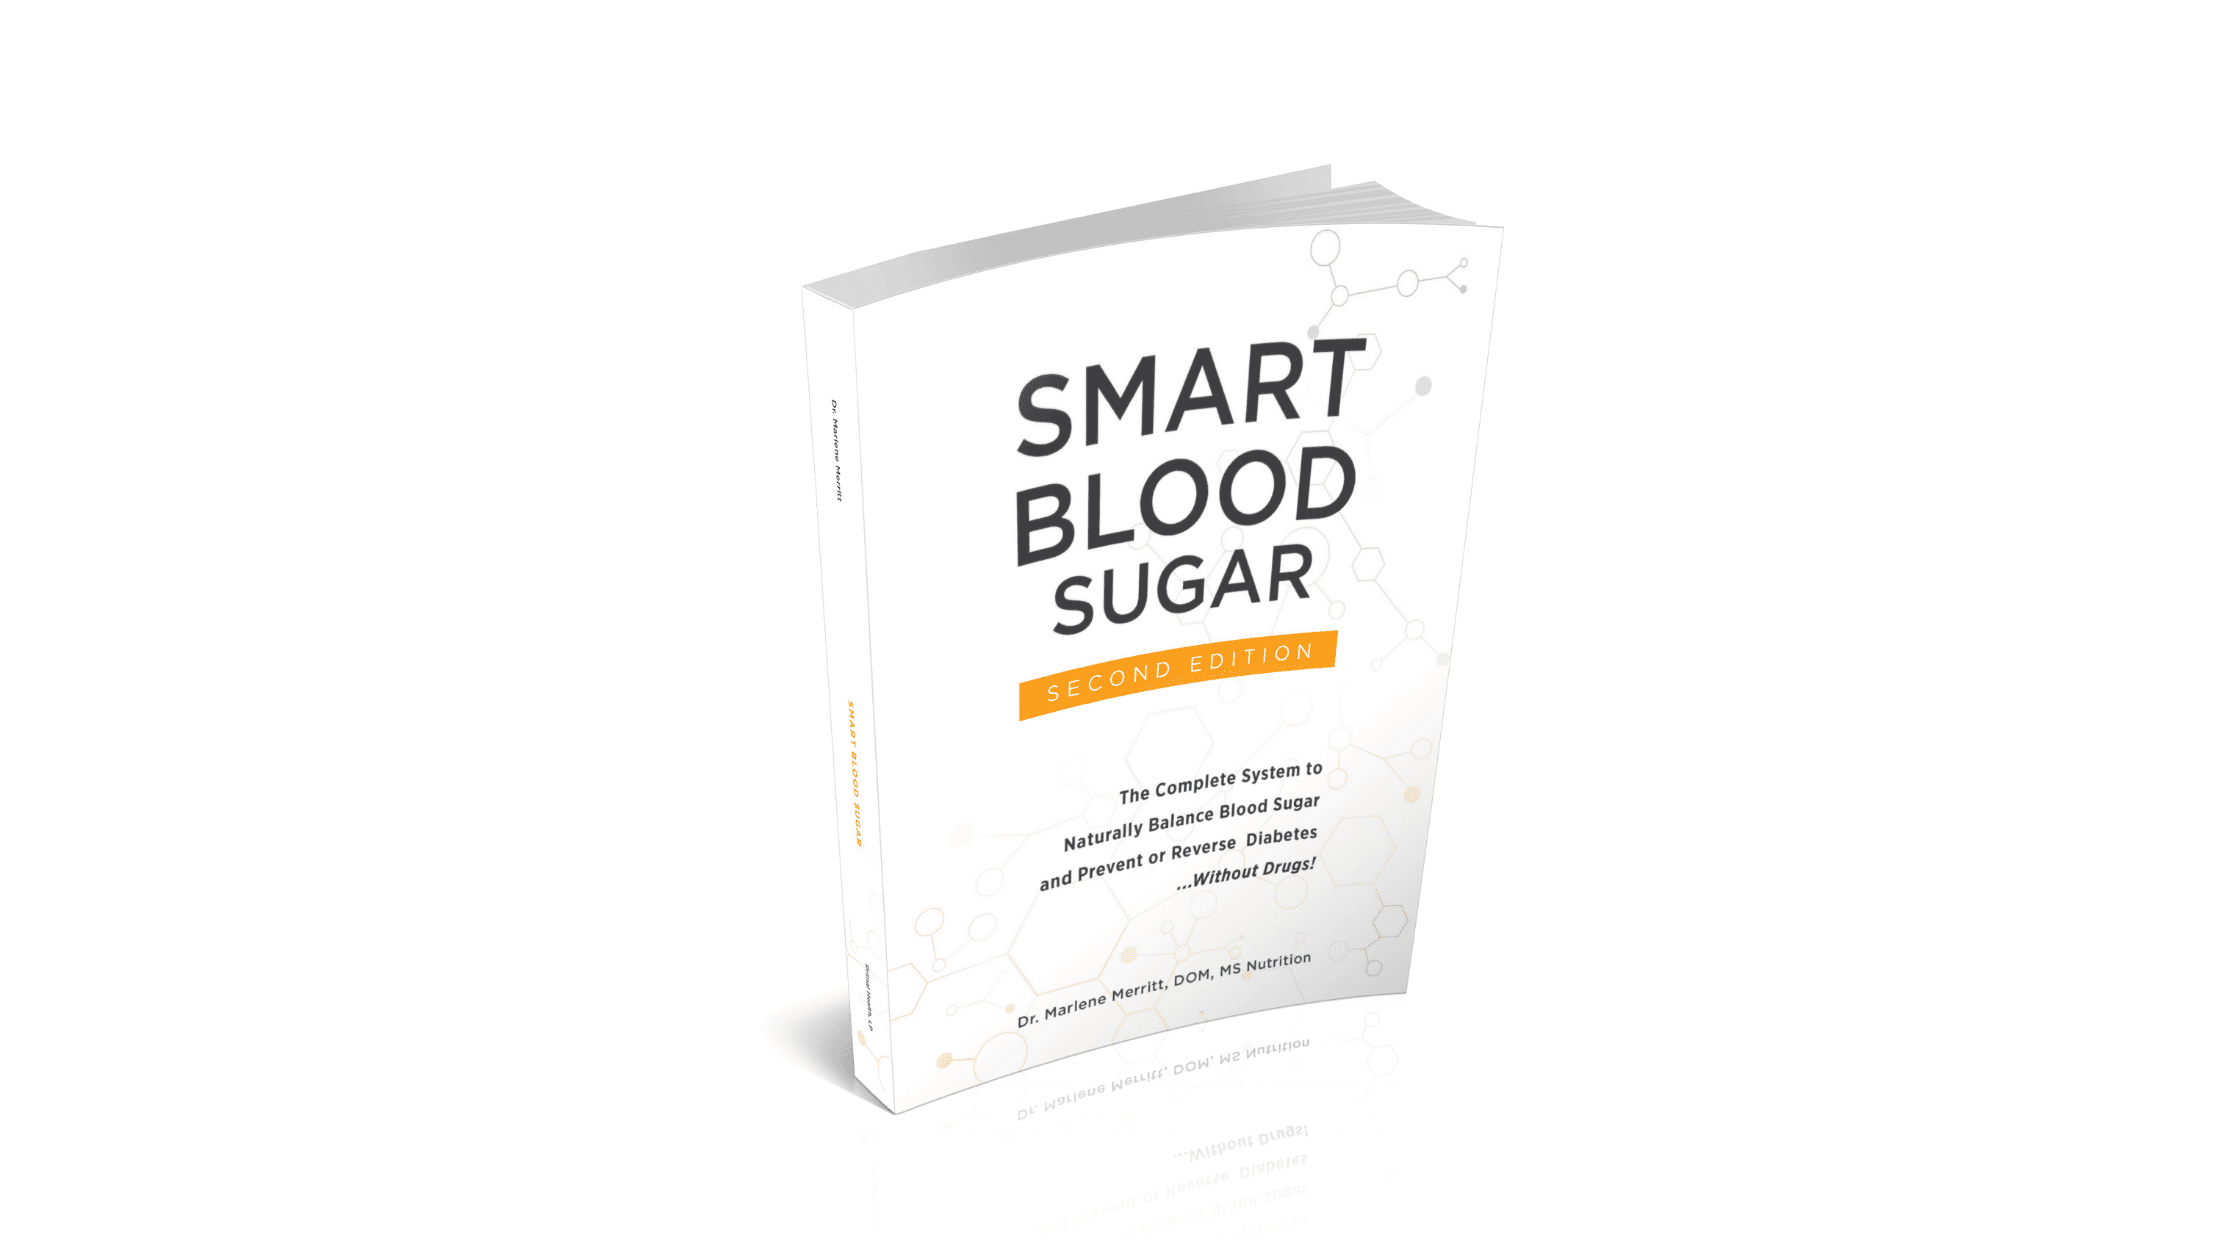 Smart Blood Sugar Reviews